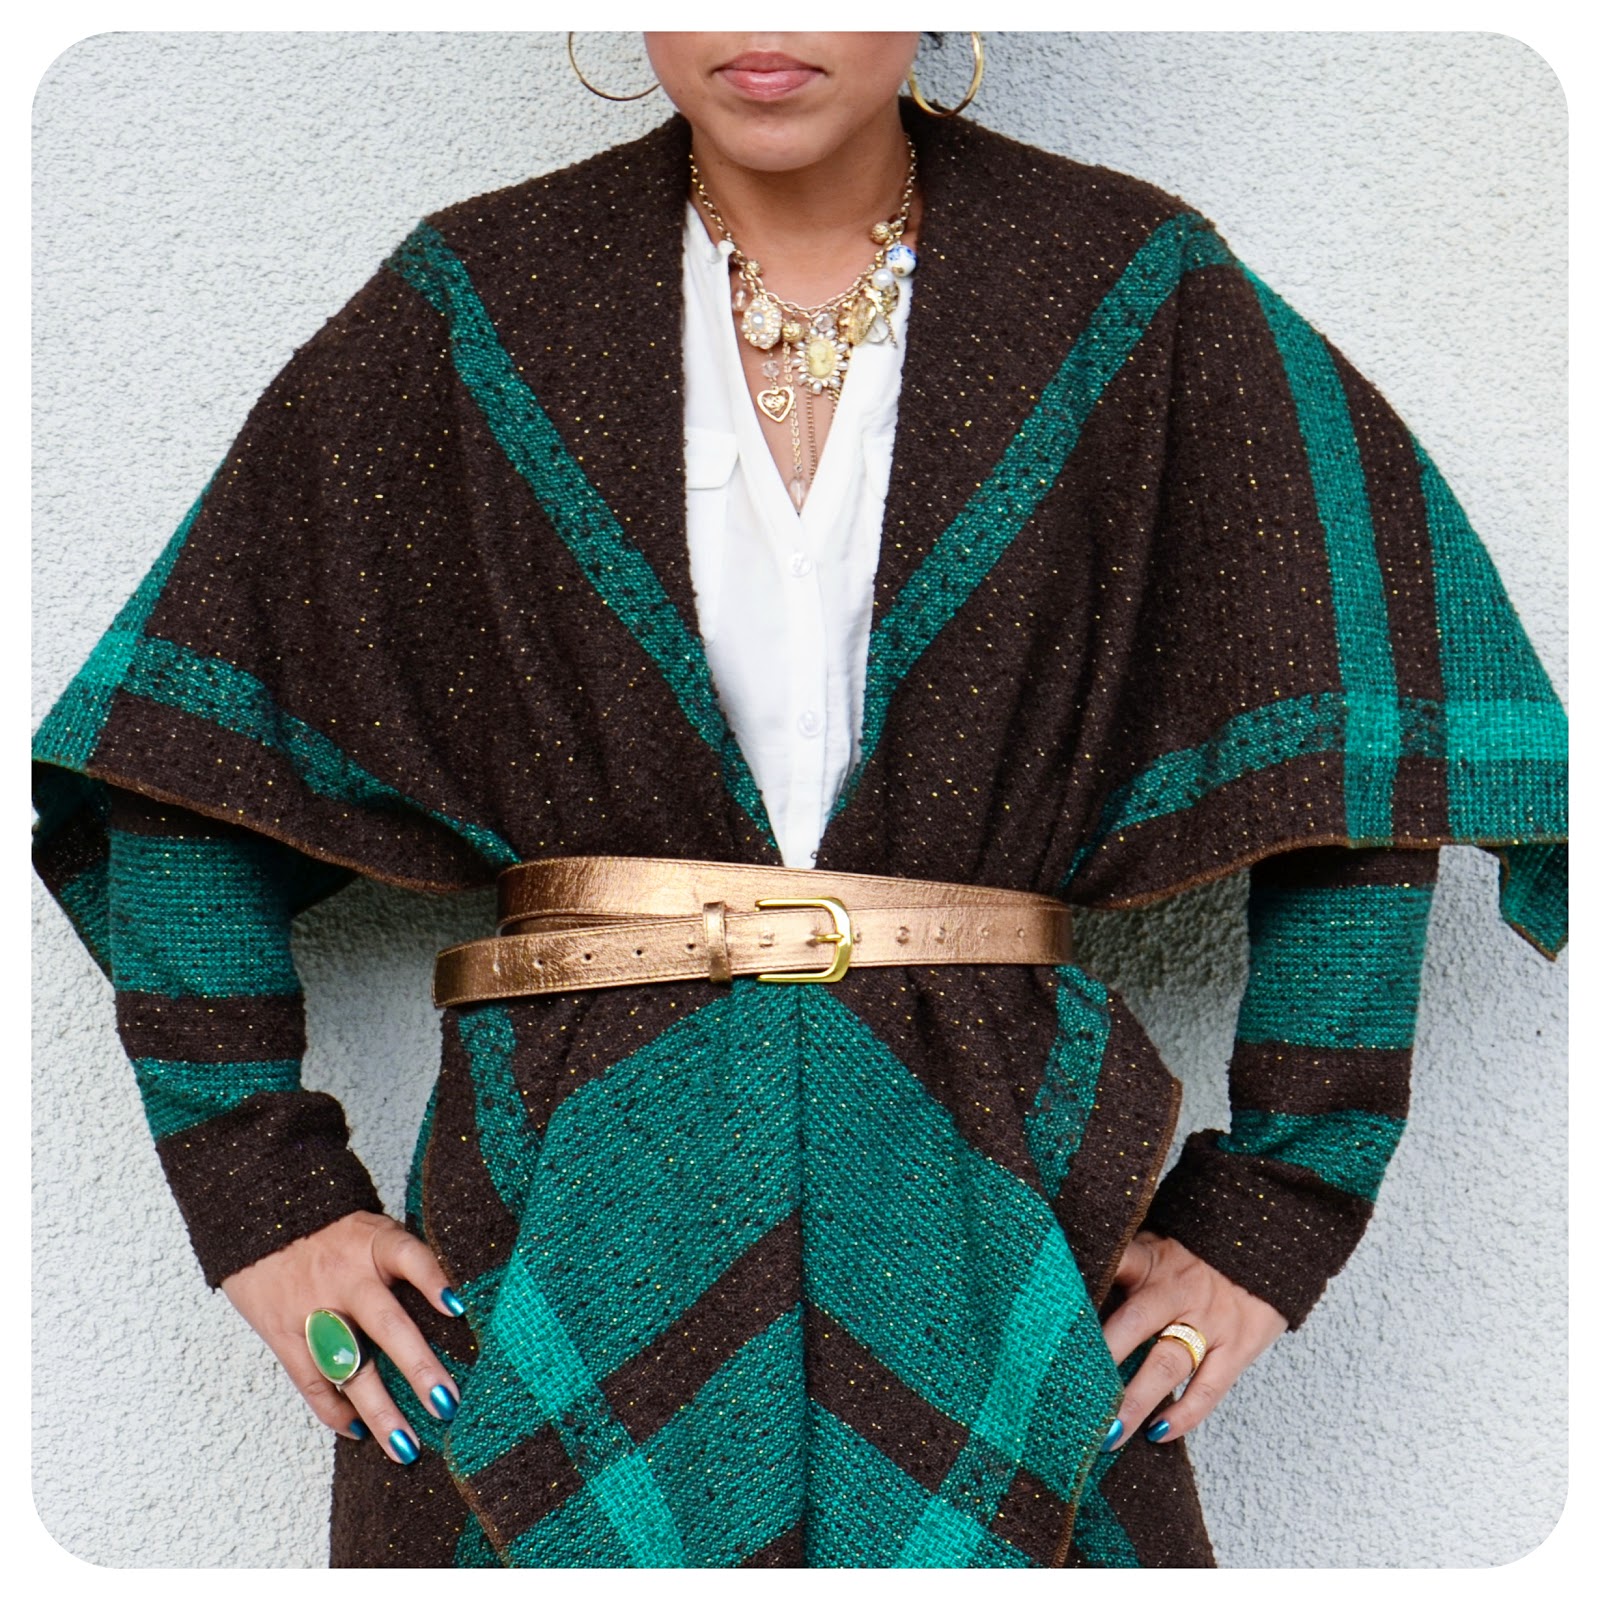 OOTD: DIY Blanket Jacket + Pattern Review V8696 |Fashion, Lifestyle